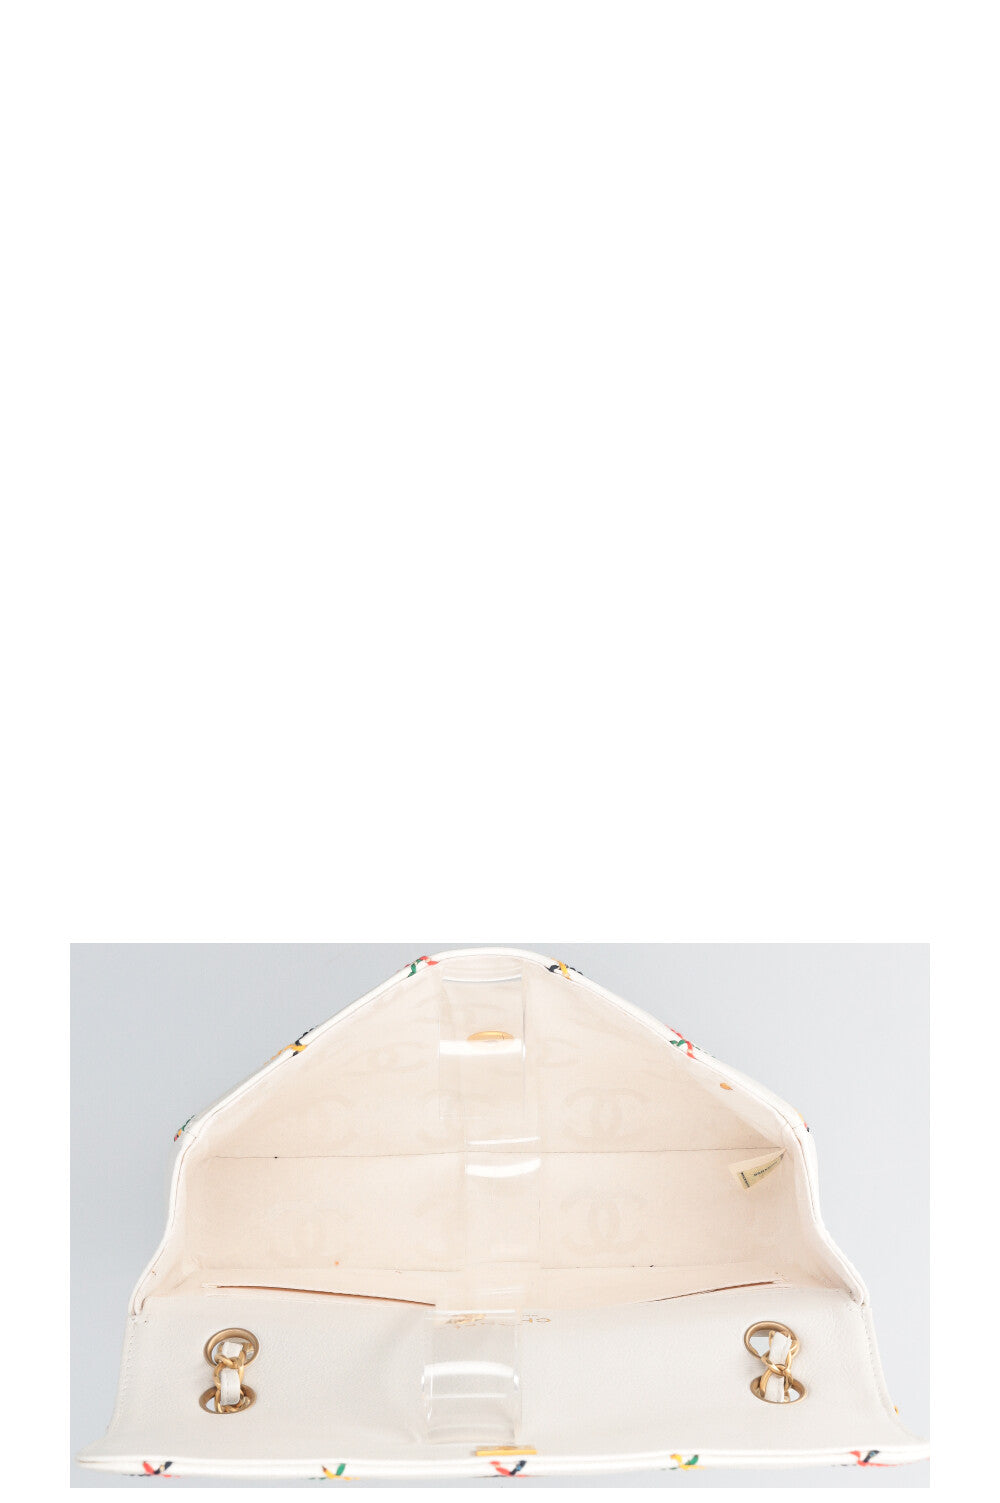 CHANEL Single Flap Bag with Rainbow Stitch Caviar White